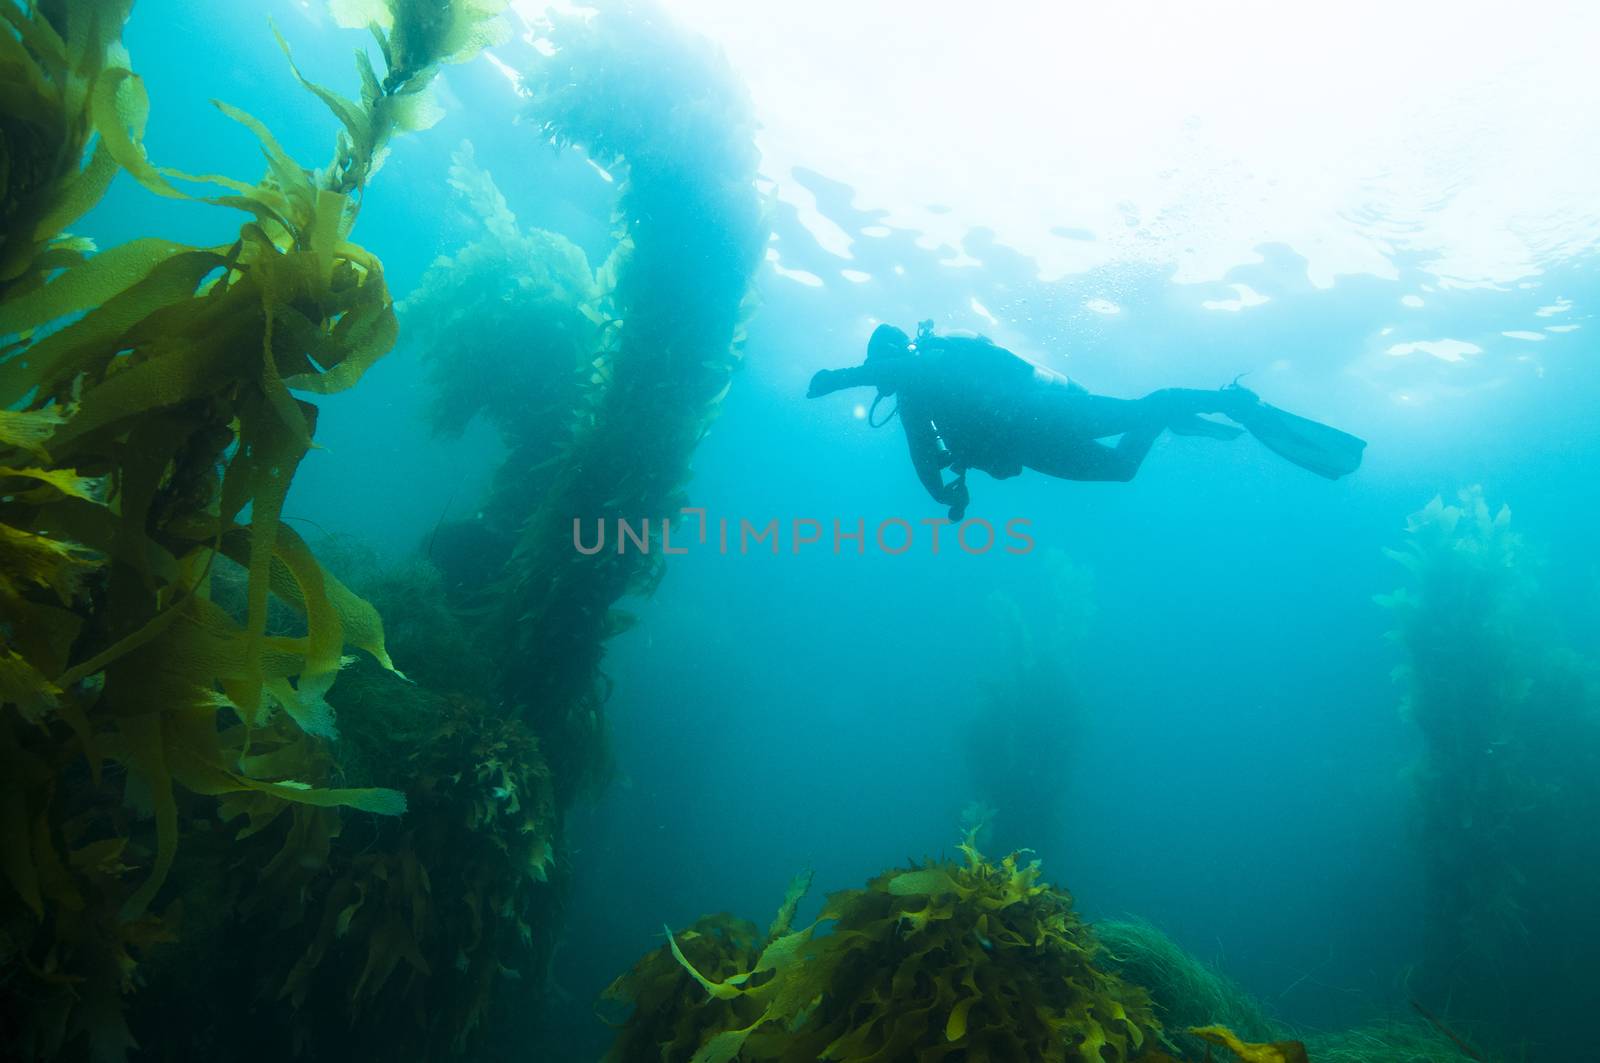 Scuba Diver off San Clemente island, CA  by Njean